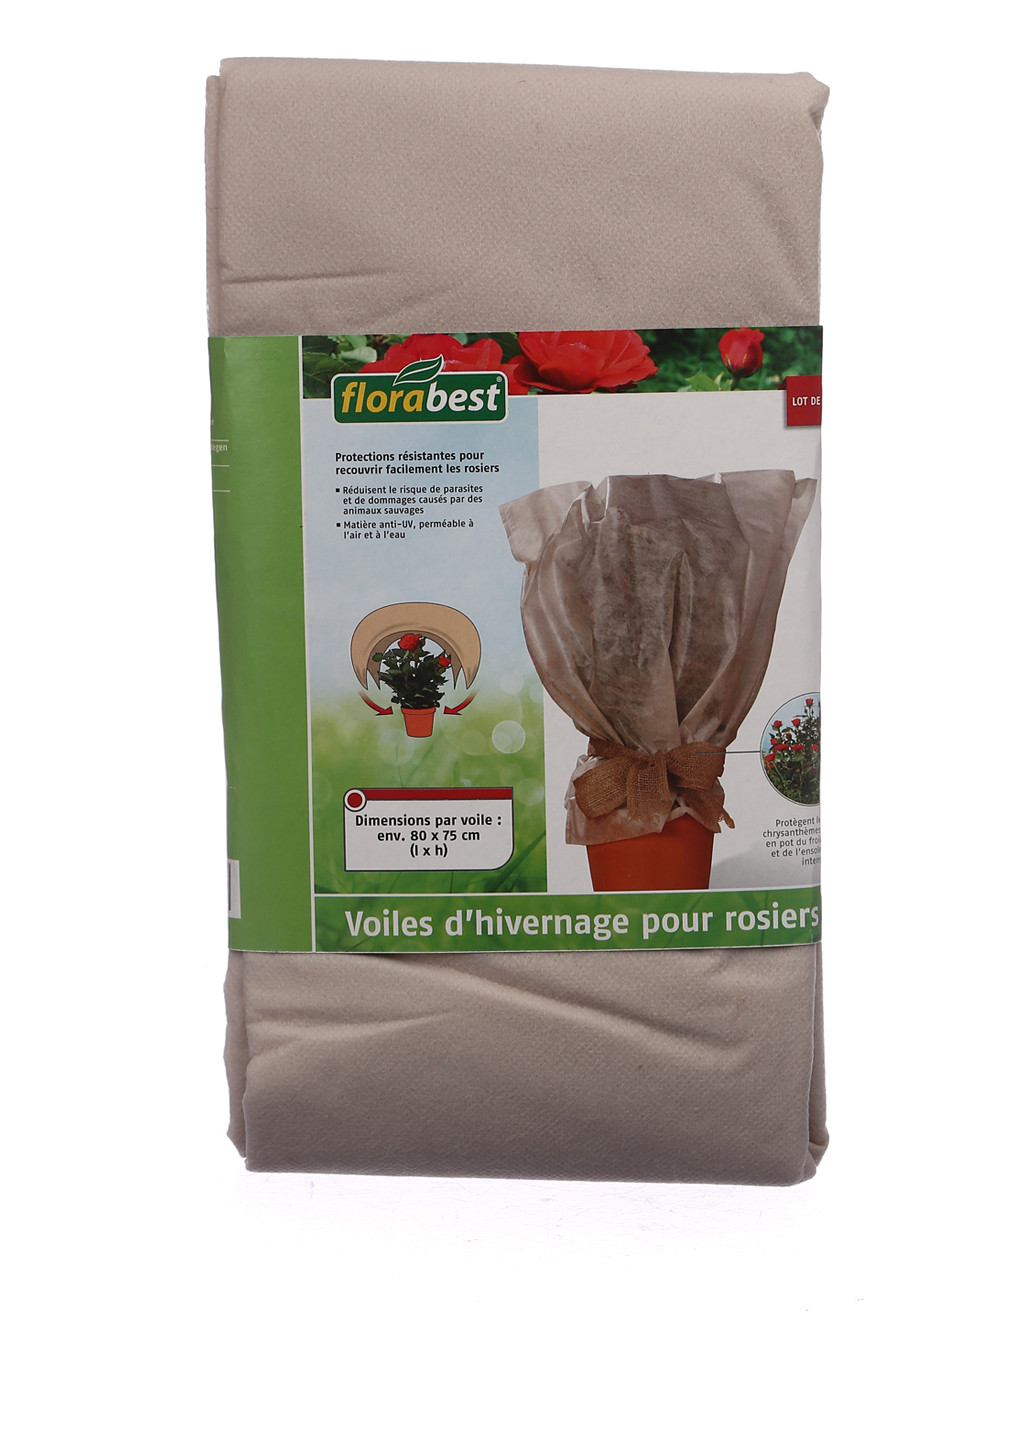 Защита растений от ветра и мороза, 80х75 см Fiorabest (99762040)